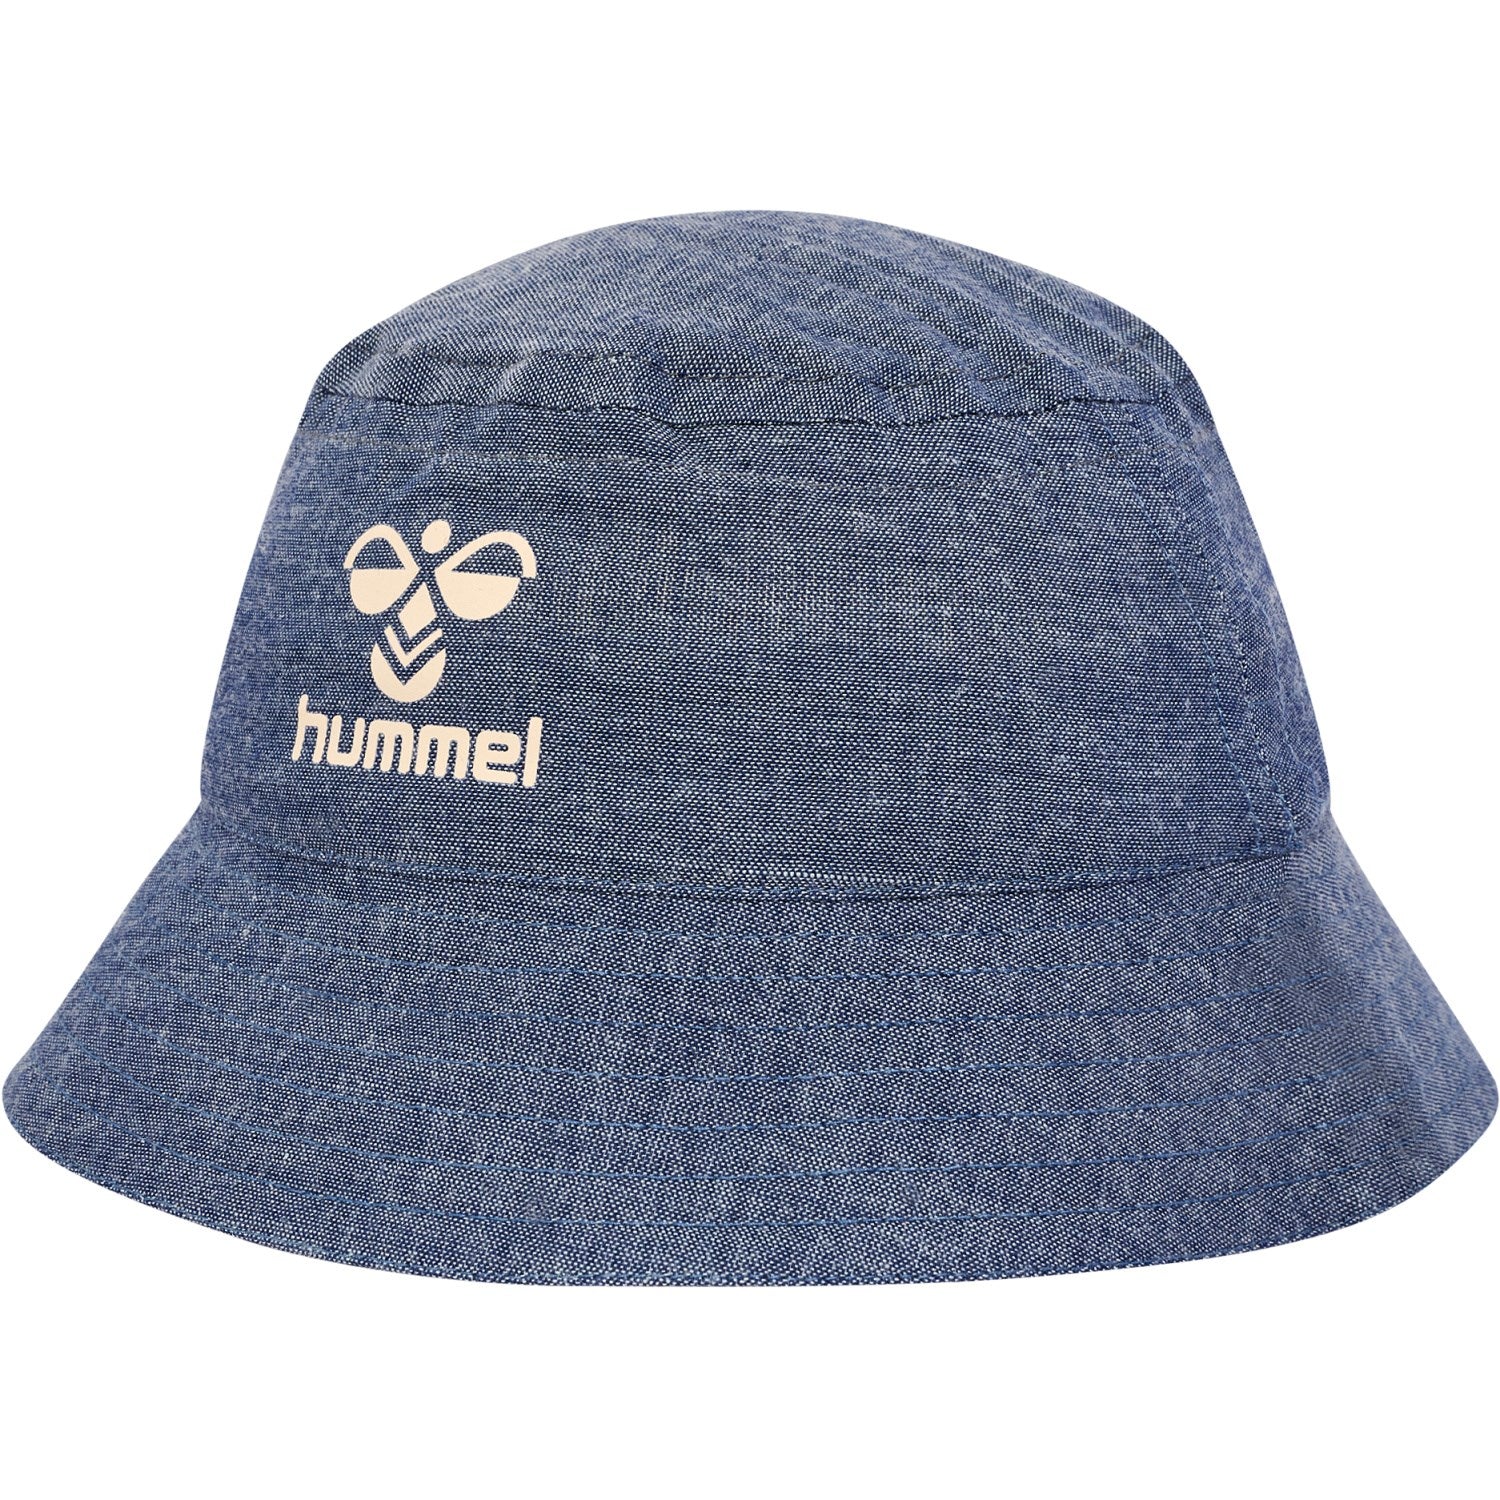 Hummel Denim Blue Corsi Thug Hatt 3